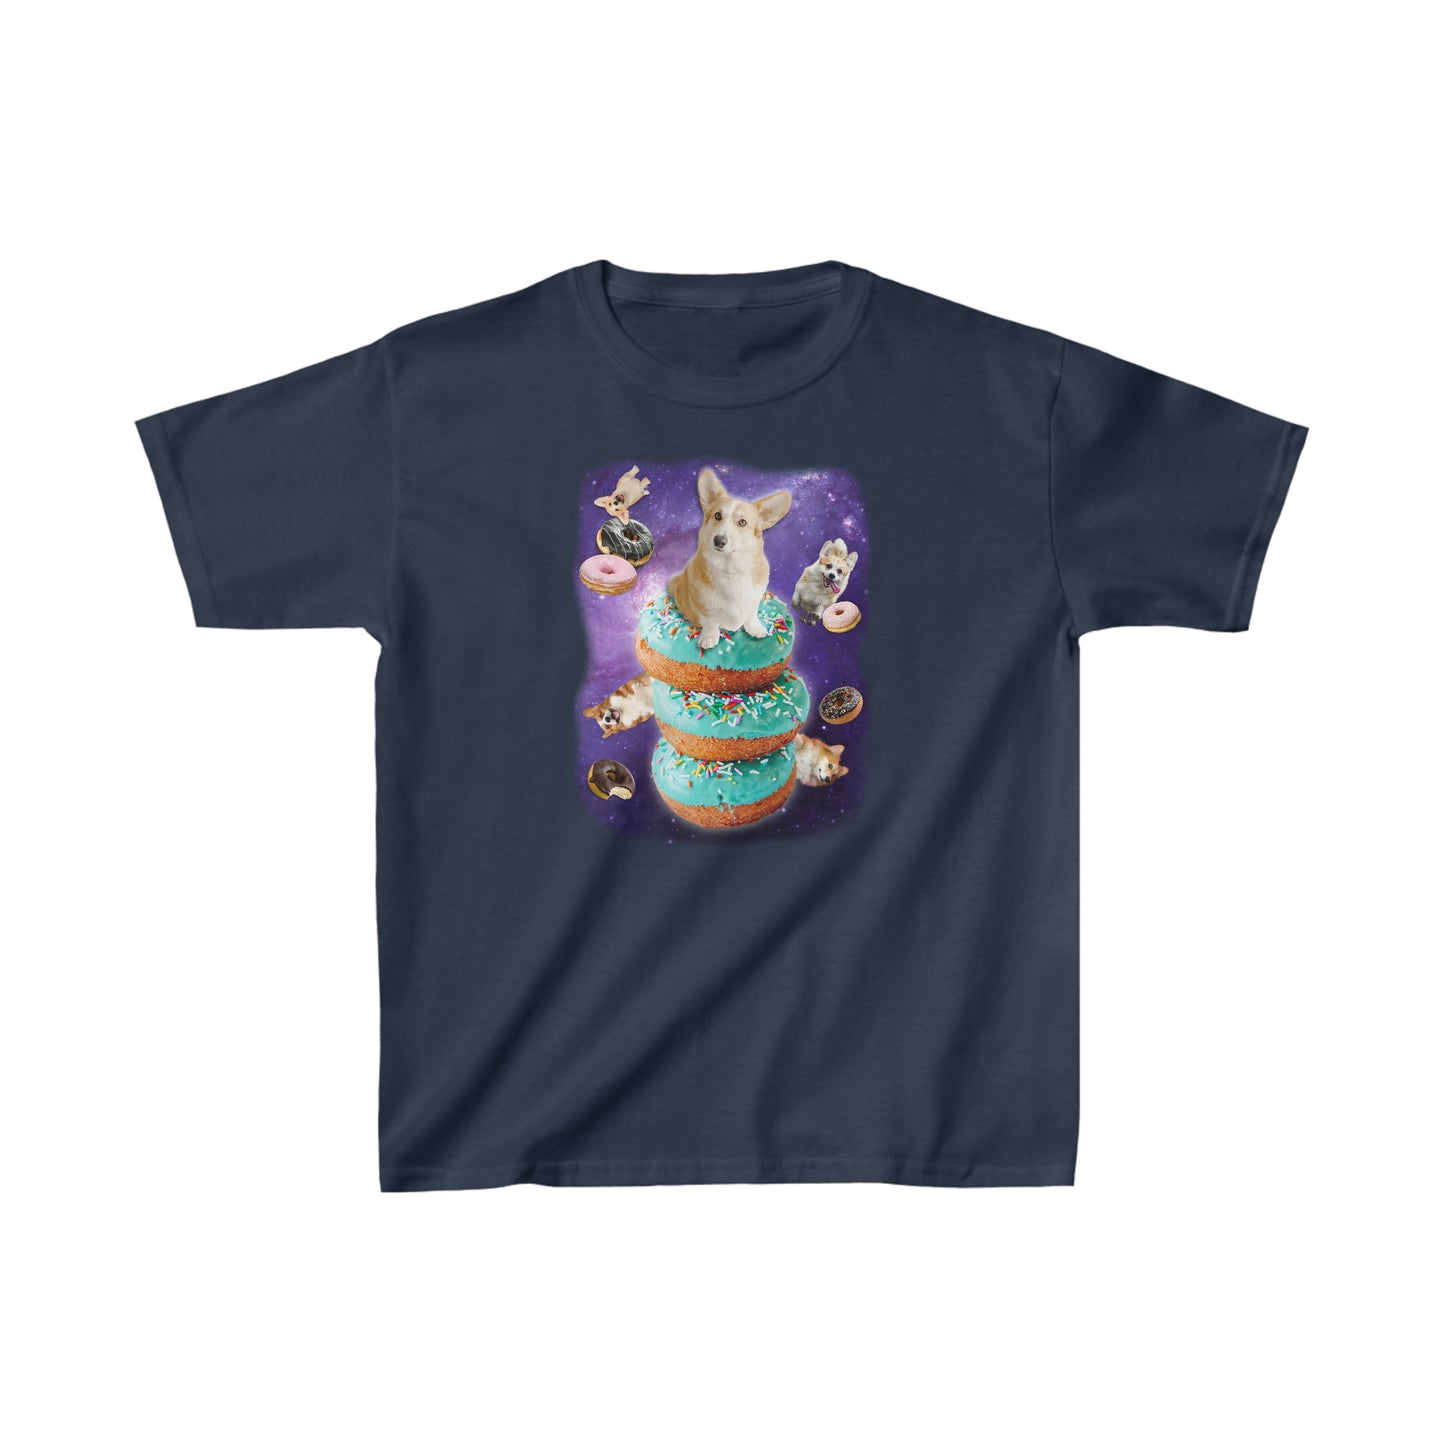 Corgi T-shirt Donut Space Galaxy Kids